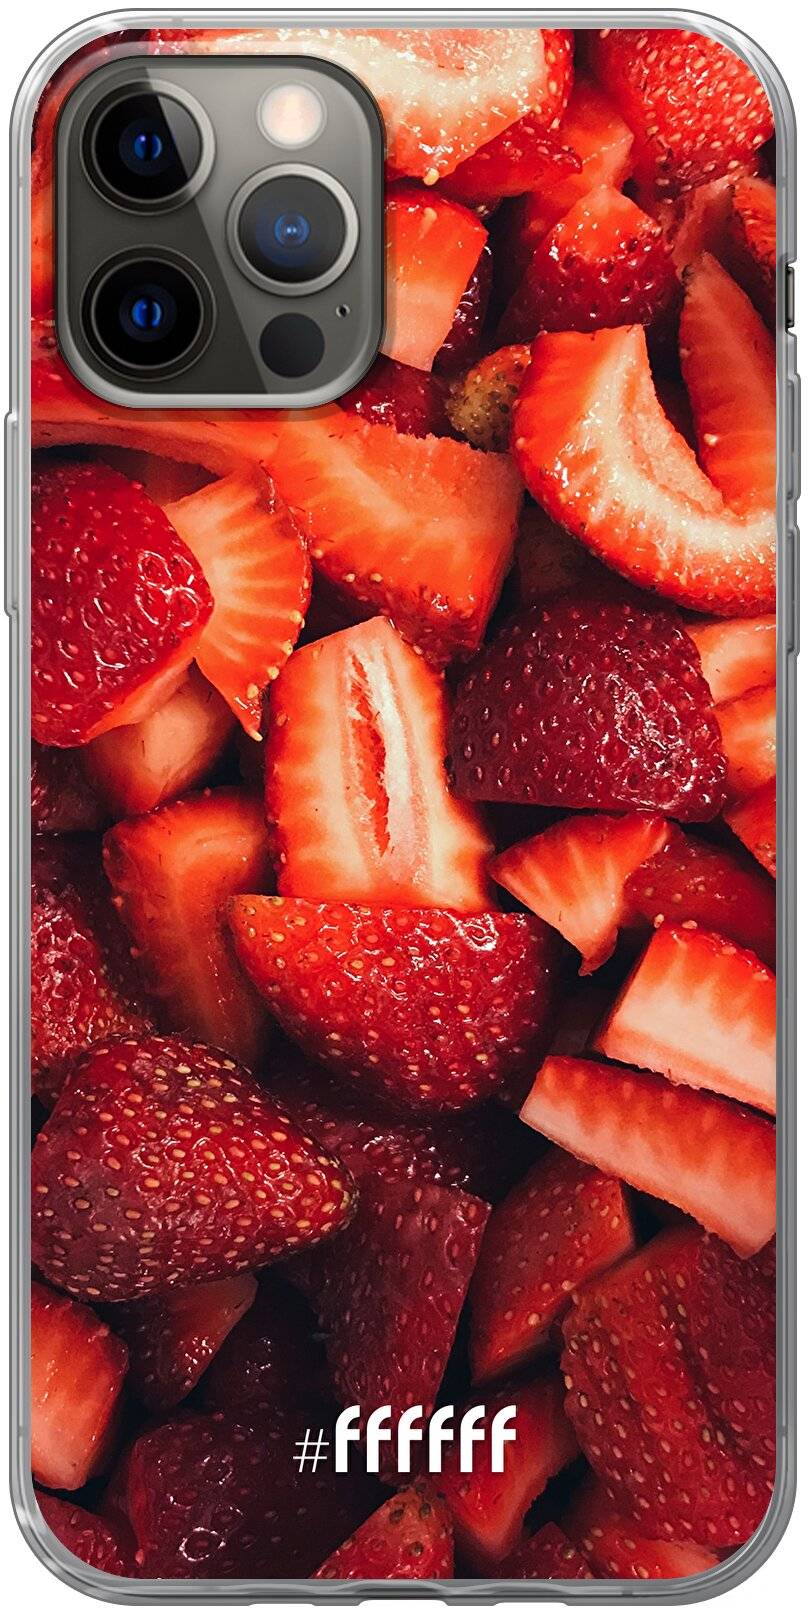 Strawberry Fields iPhone 12